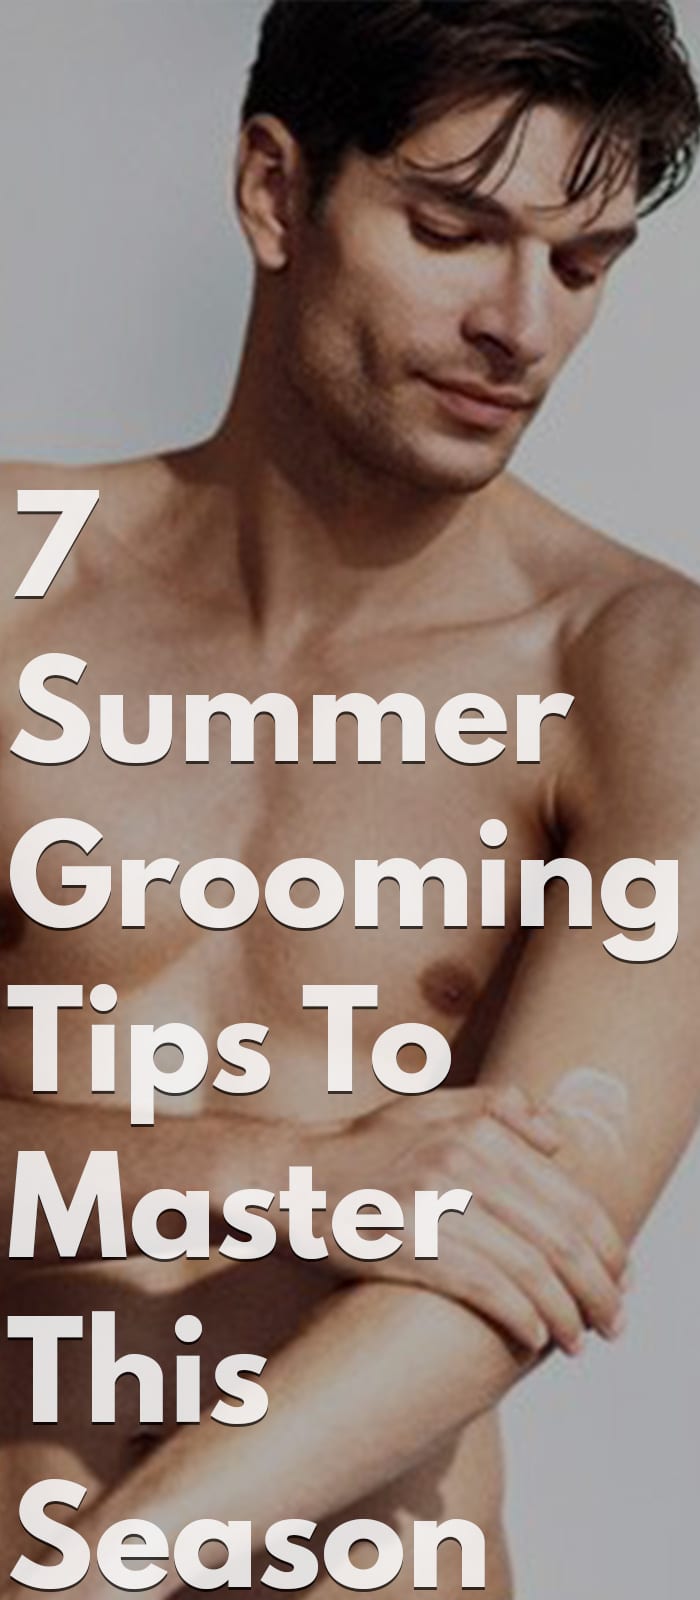 7 Summer Grooming Hacks To Master This Season